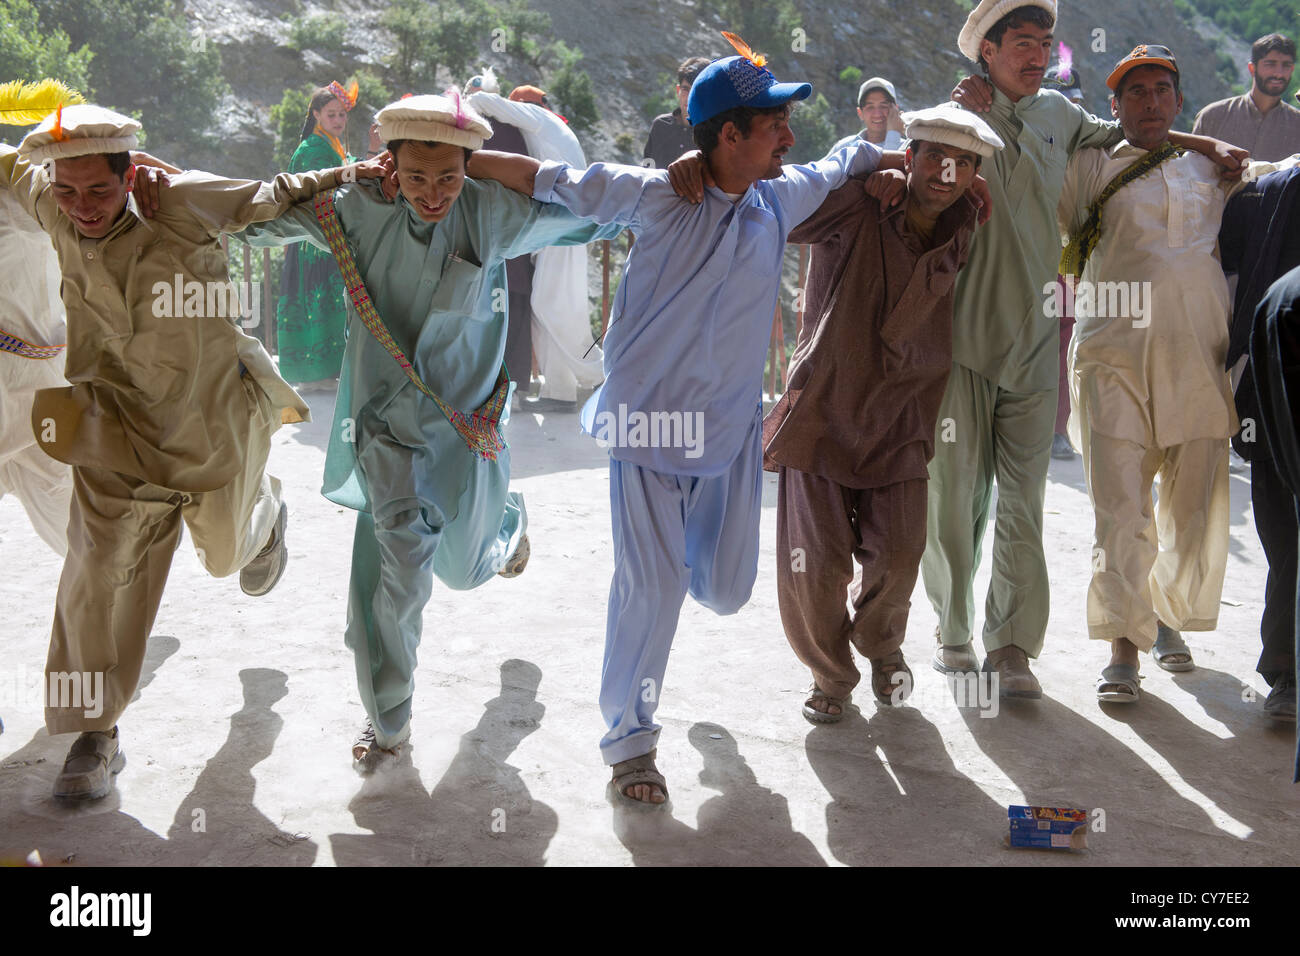 Kalash men dancing in a line at the Kalash Joshi (Spring Festival), Grum Village Charso (dancing ground), Rumbur Valley, Chitral, Khyber-Pakhtunkhwa, Pakistan Stock Photo